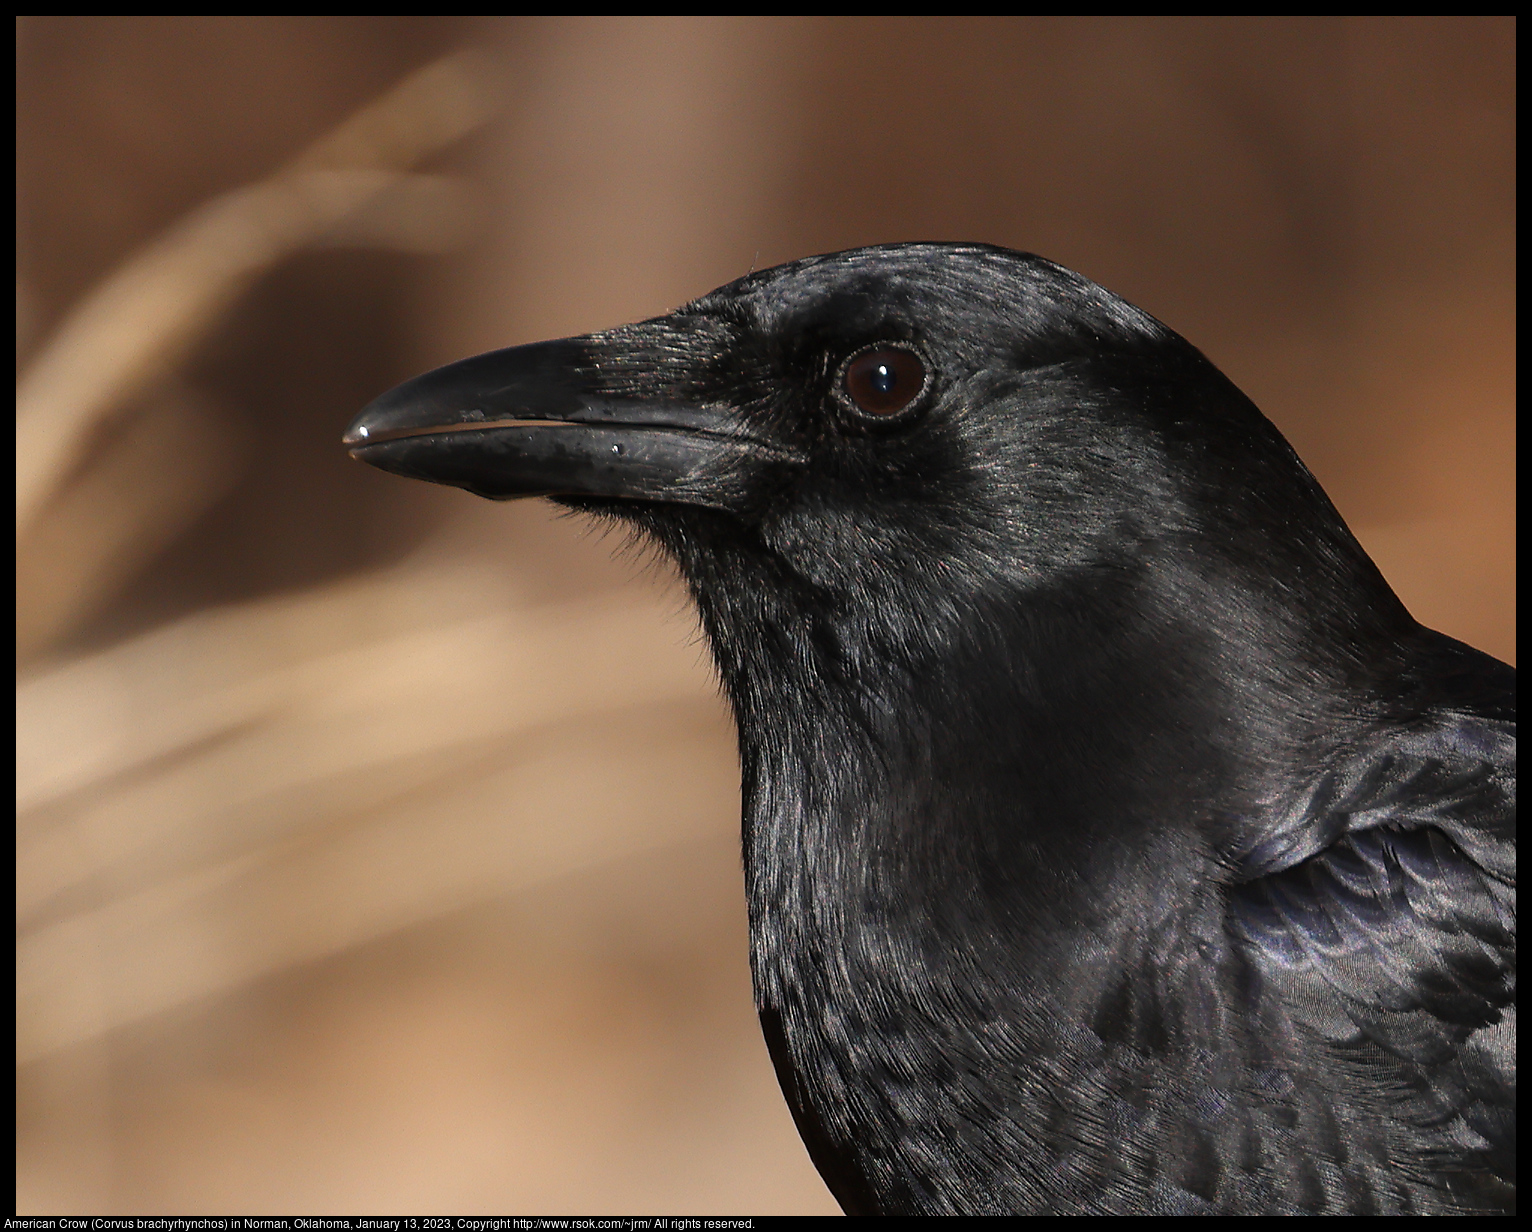 American Crow (Corvus brachyrhynchos) in Norman, Oklahoma, January 13, 2023